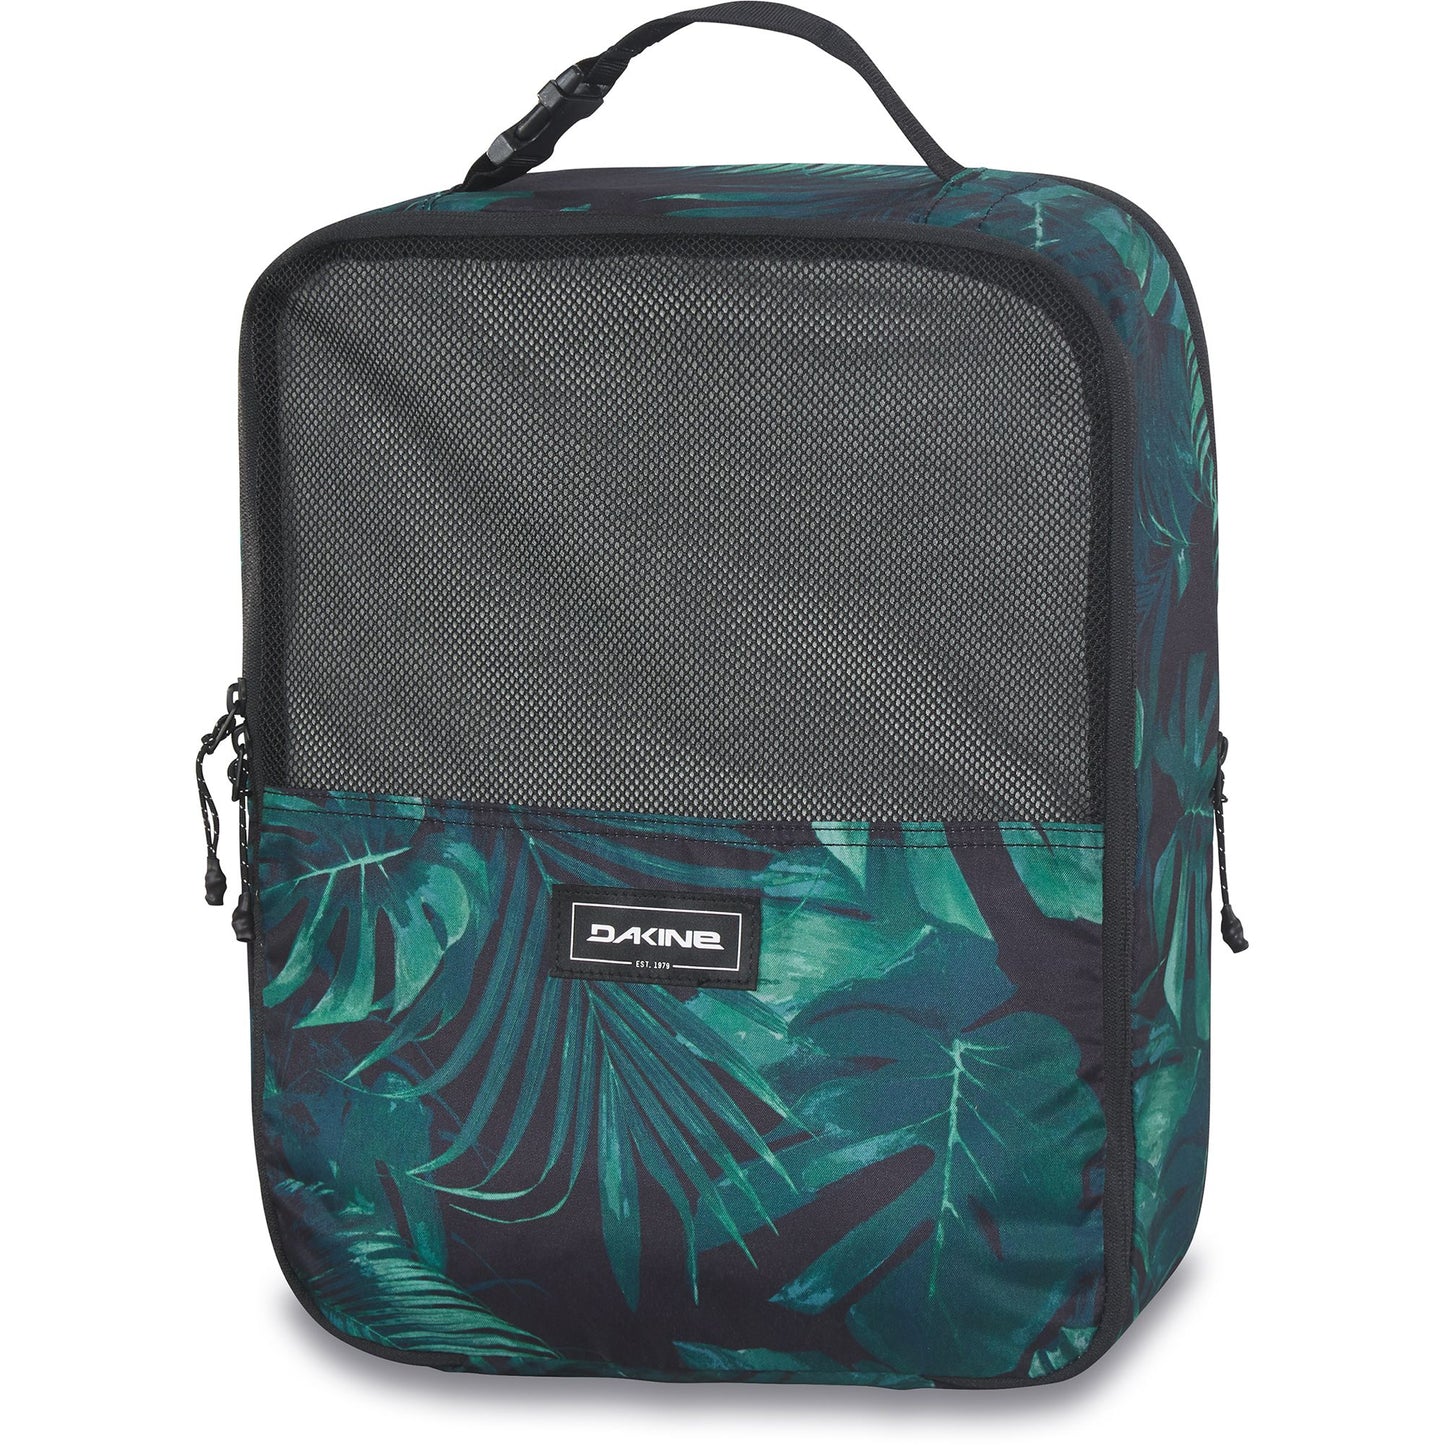 Dakine Expandable Packing Cube - Dakine Travel Bags